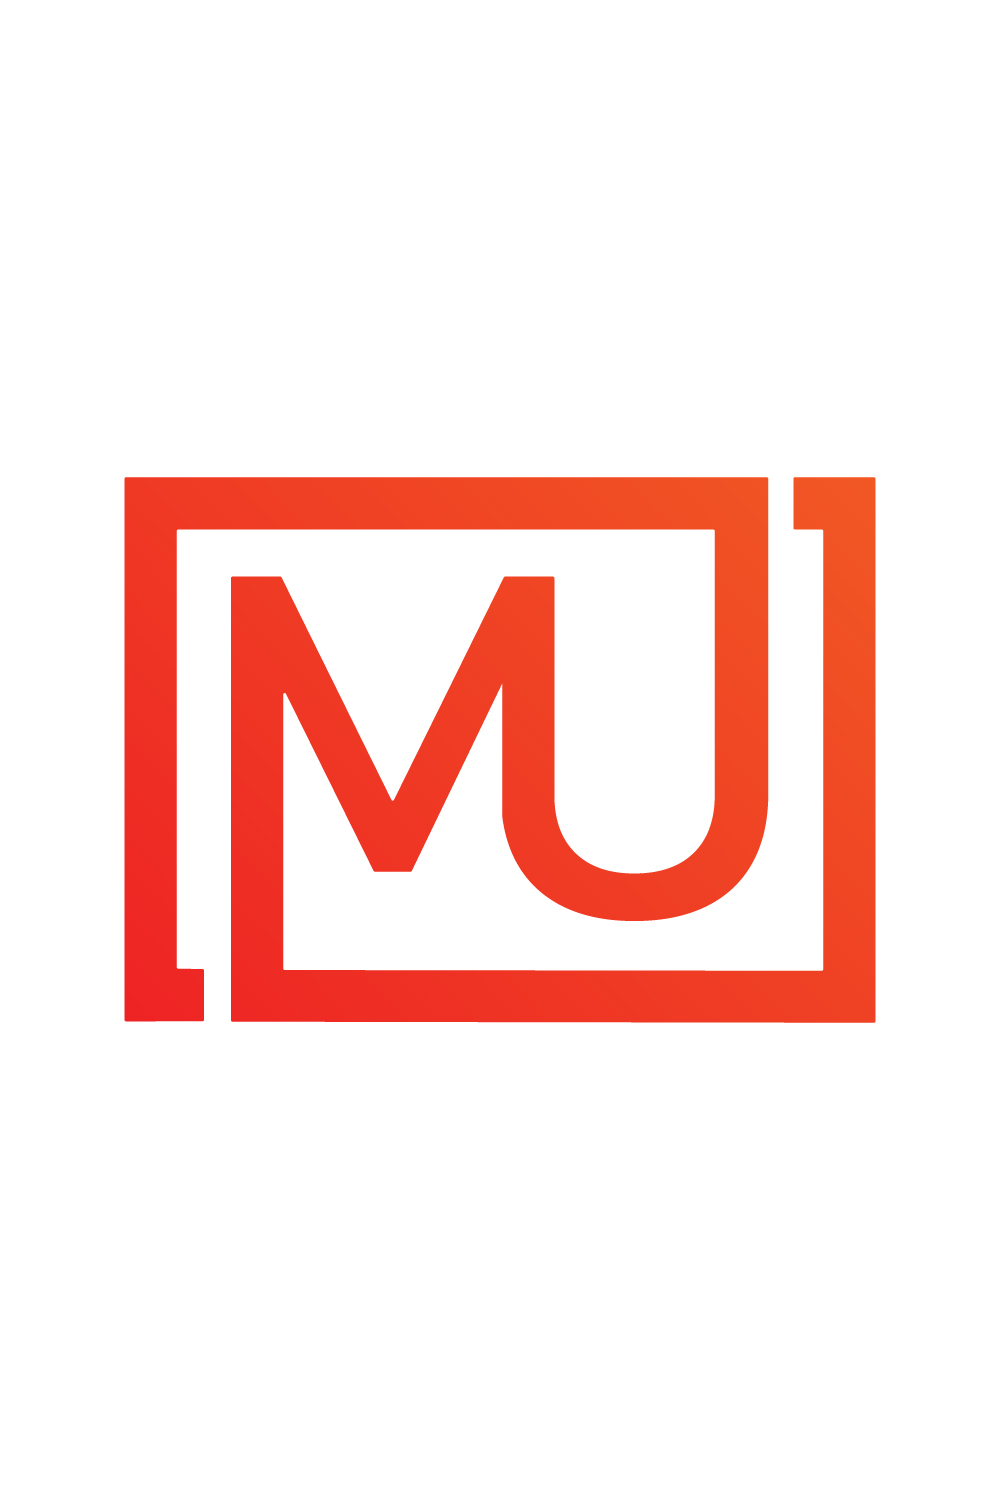 Initials MU letter logo design vector images MU logo orange color icon design UM logo design template vector icon illustration UM Premium vector best company identity pinterest preview image.